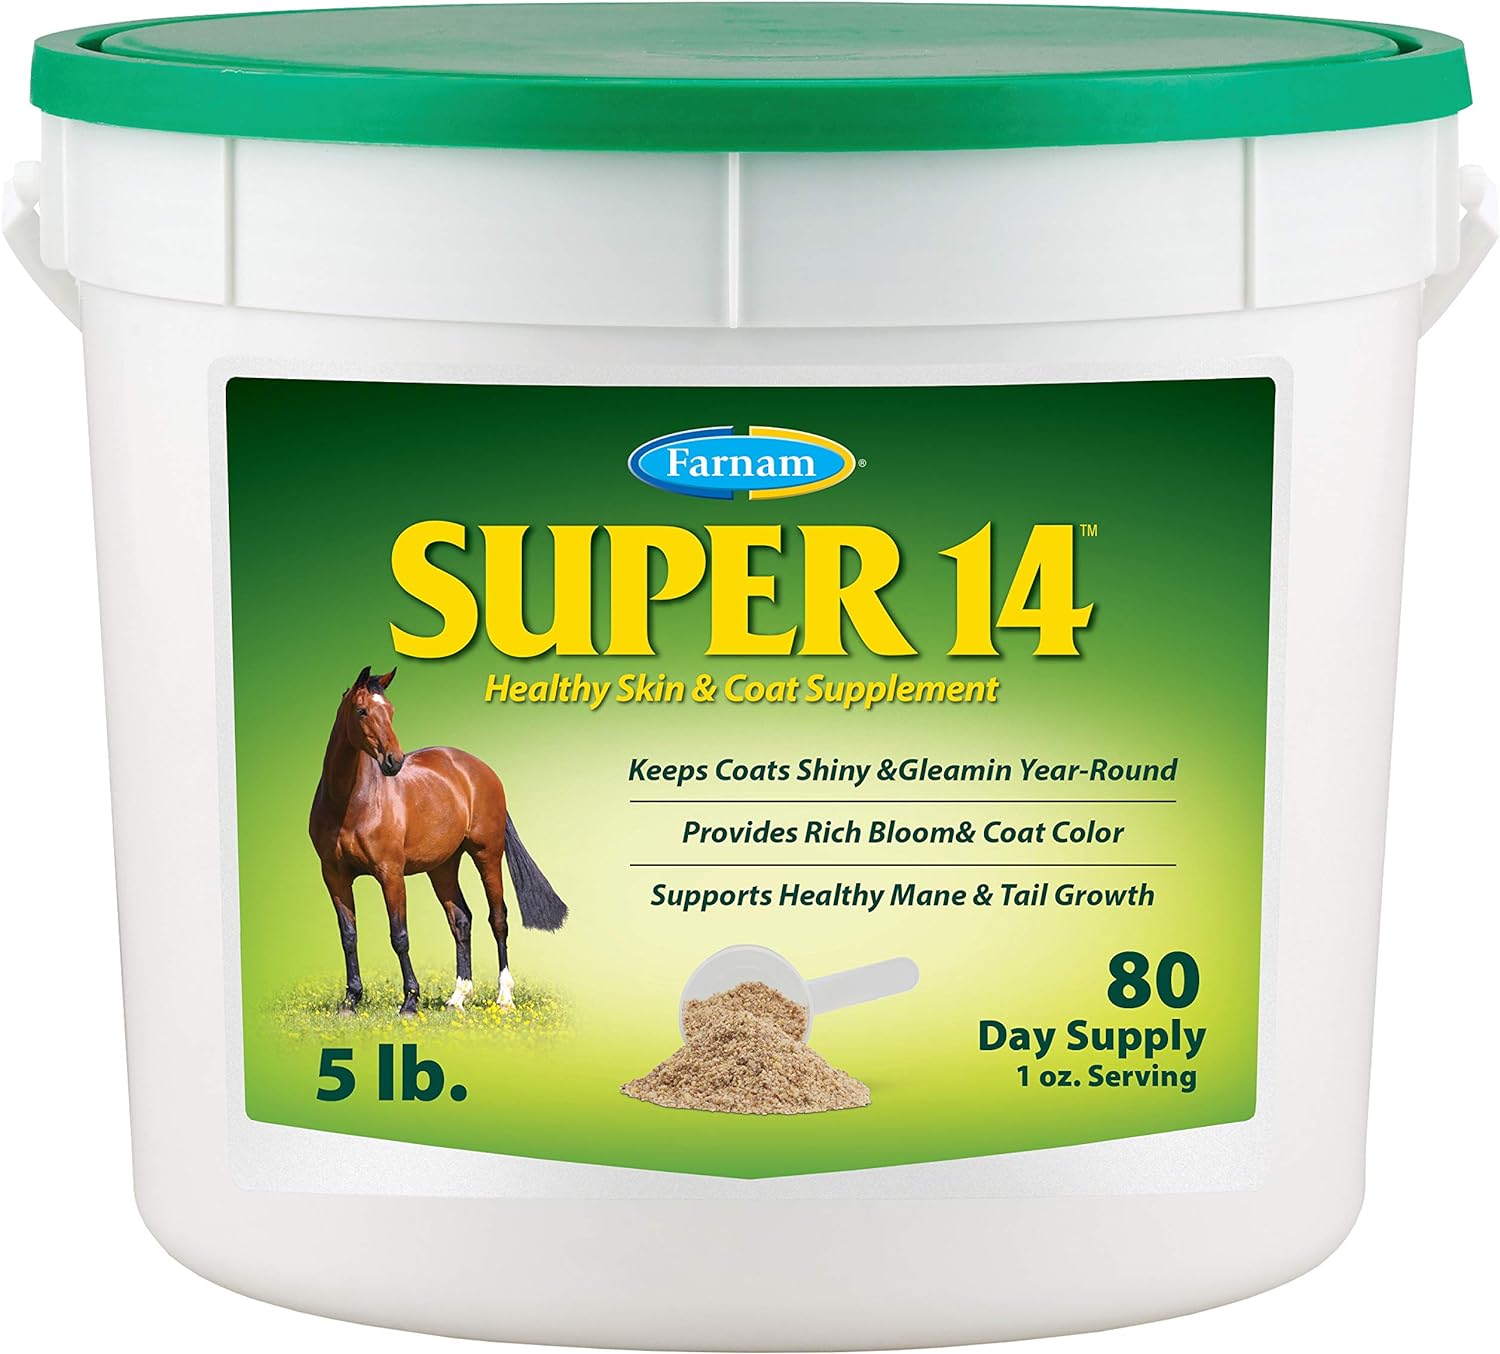 Farnam Super 14 Healthy Skin & Coat Supplement for 